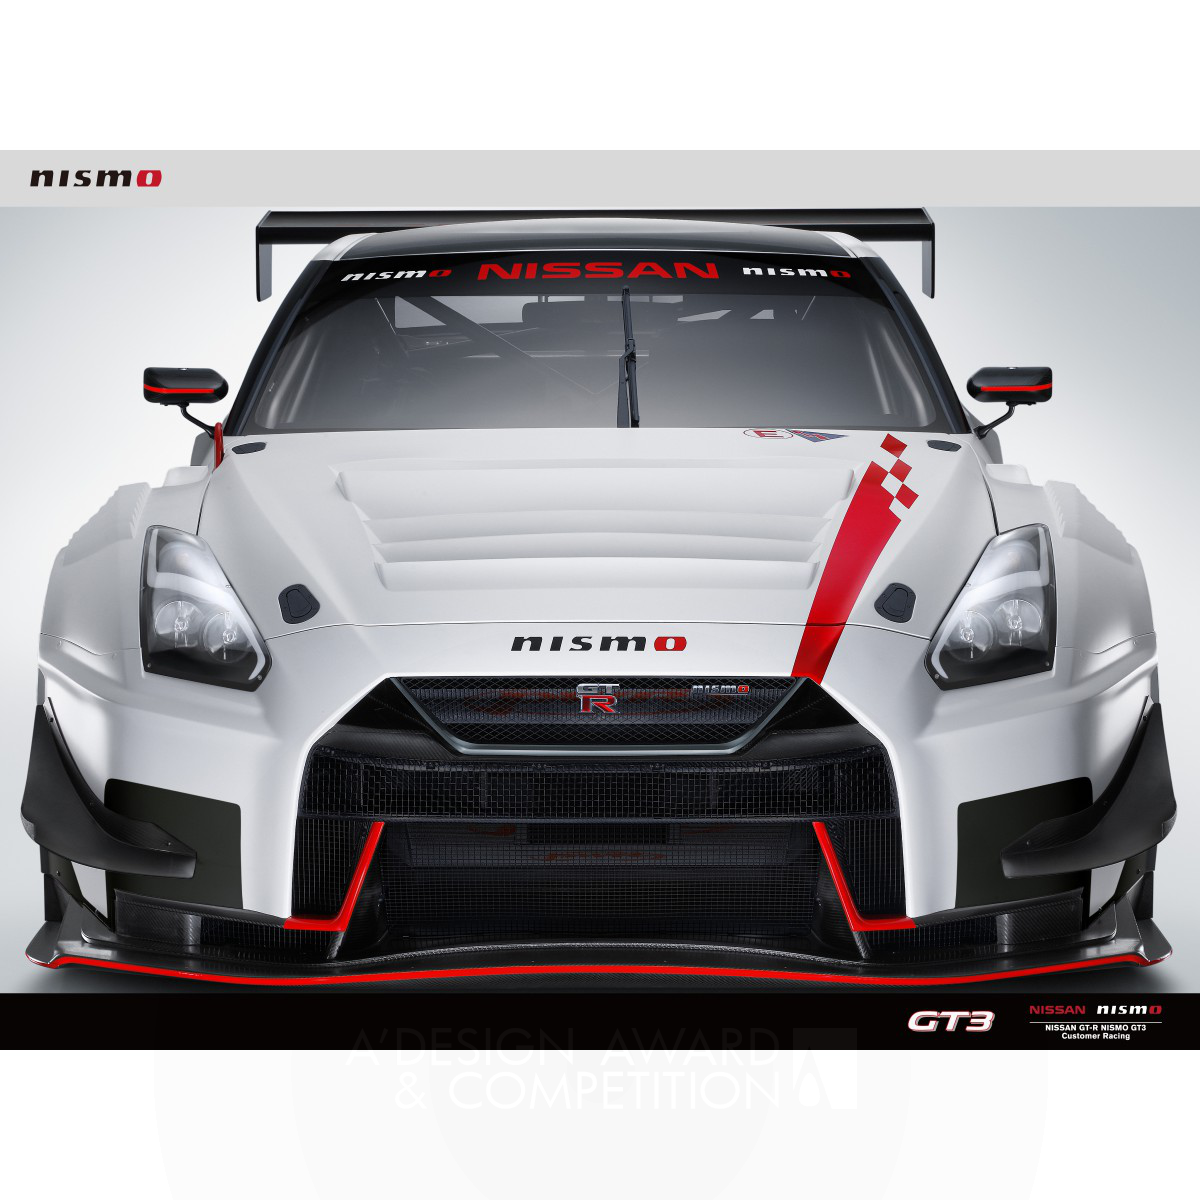 Nissan GT-R Nismo GT3 Spec Web PDF Brochure by E-graphics communications